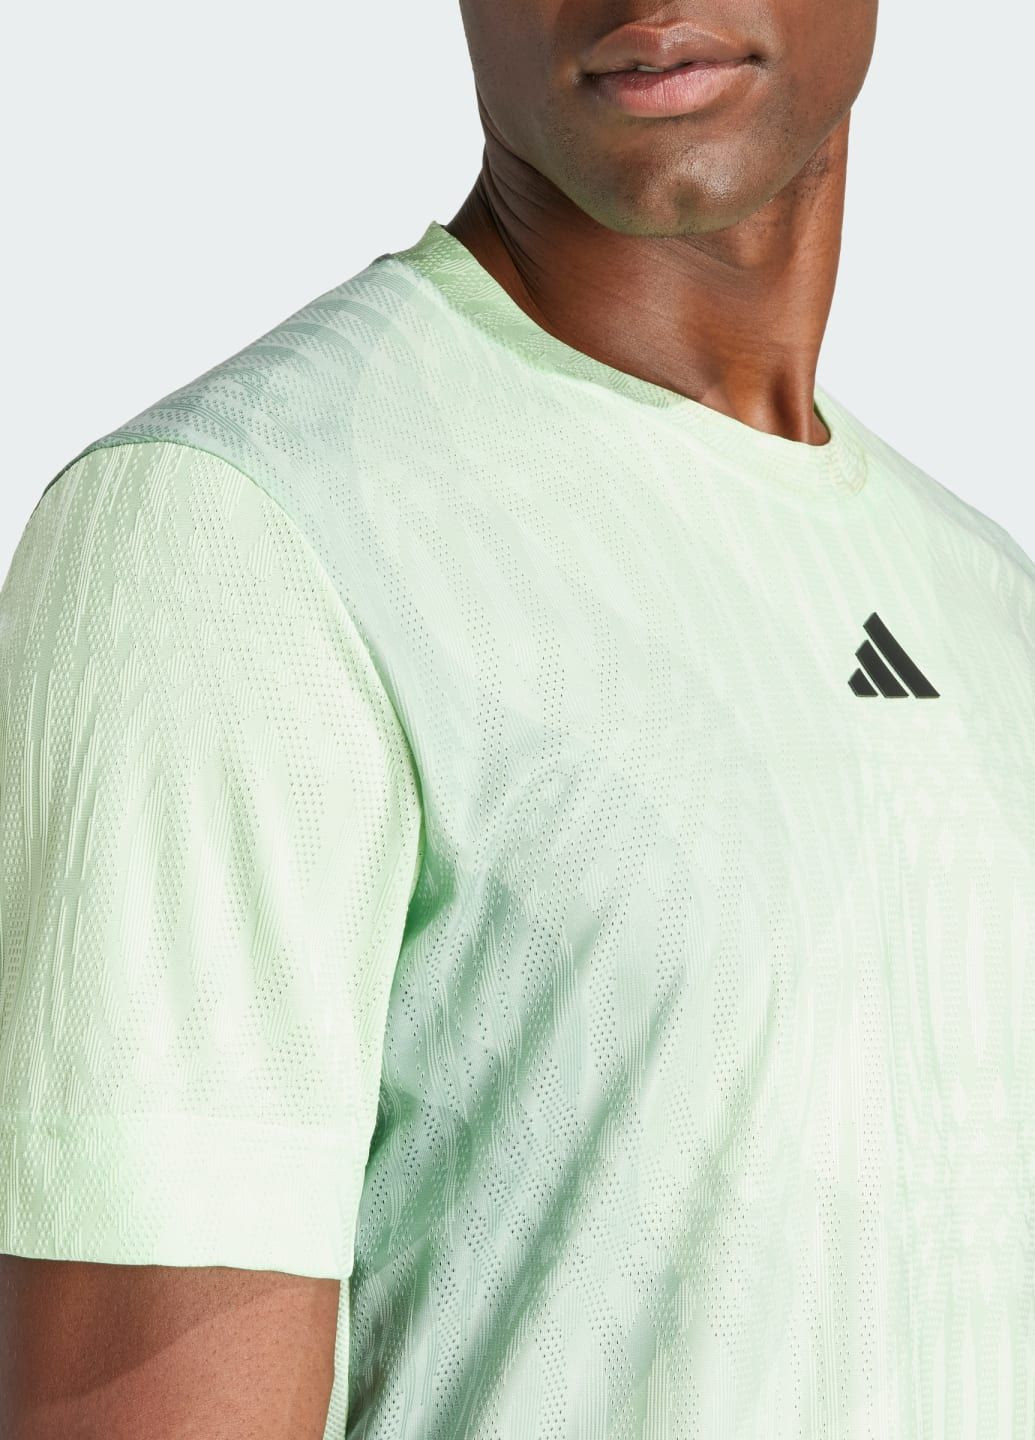 Зеленая футболка tennis airchill pro freelift adidas